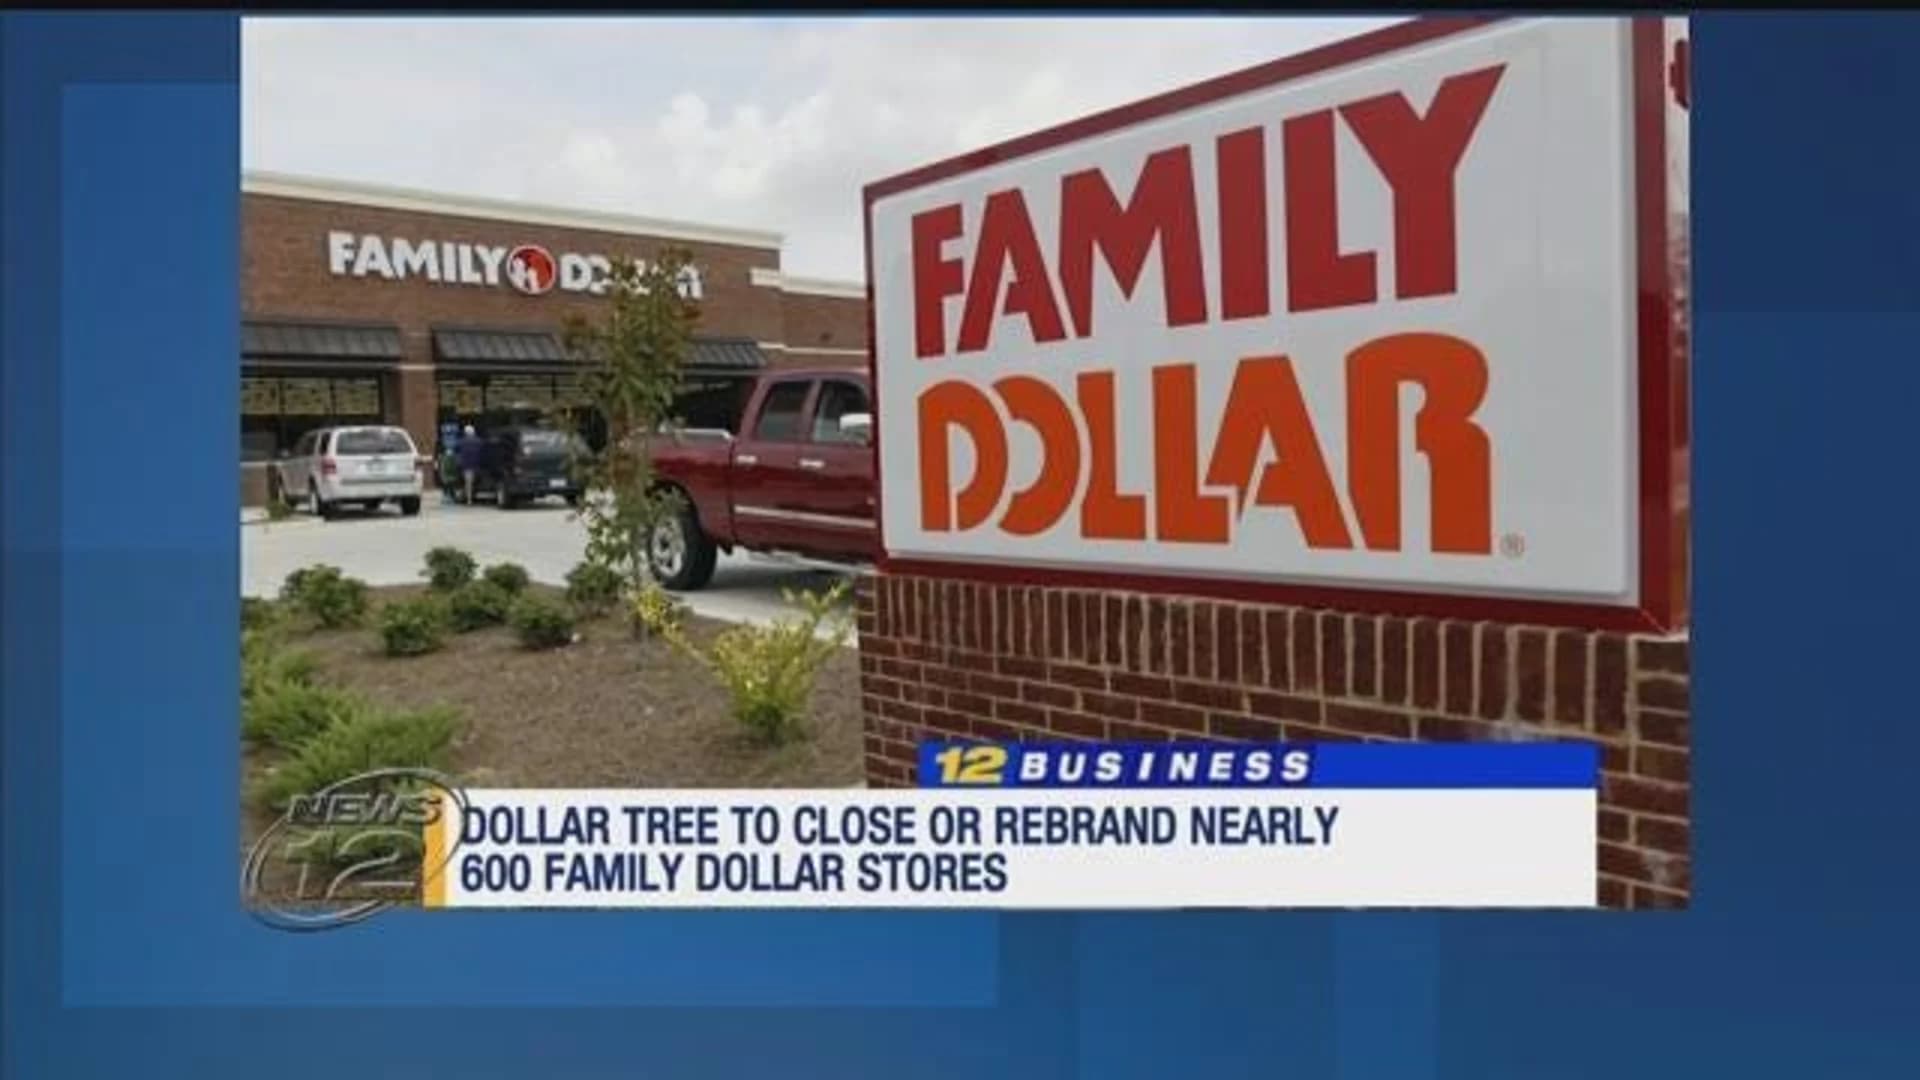 Dollar Tree set to close, rebrand 600 Family Dollar stores